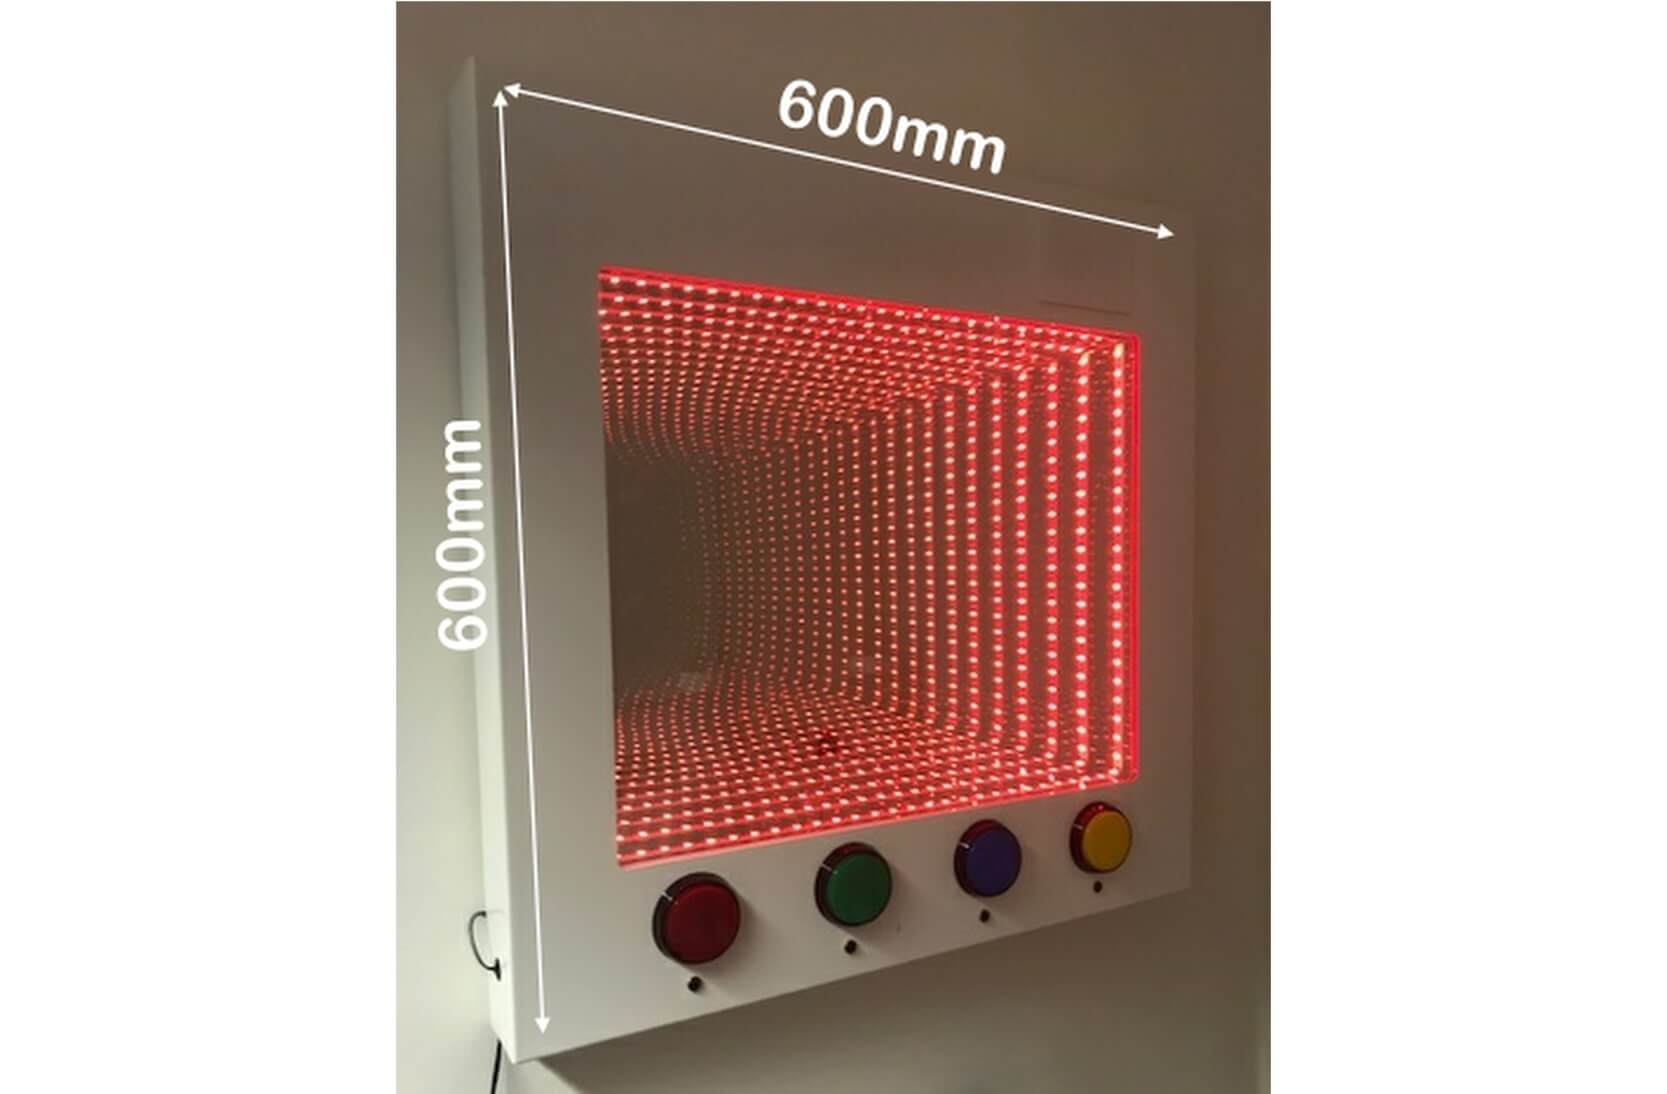 Small Infinity Panel - sensory light product